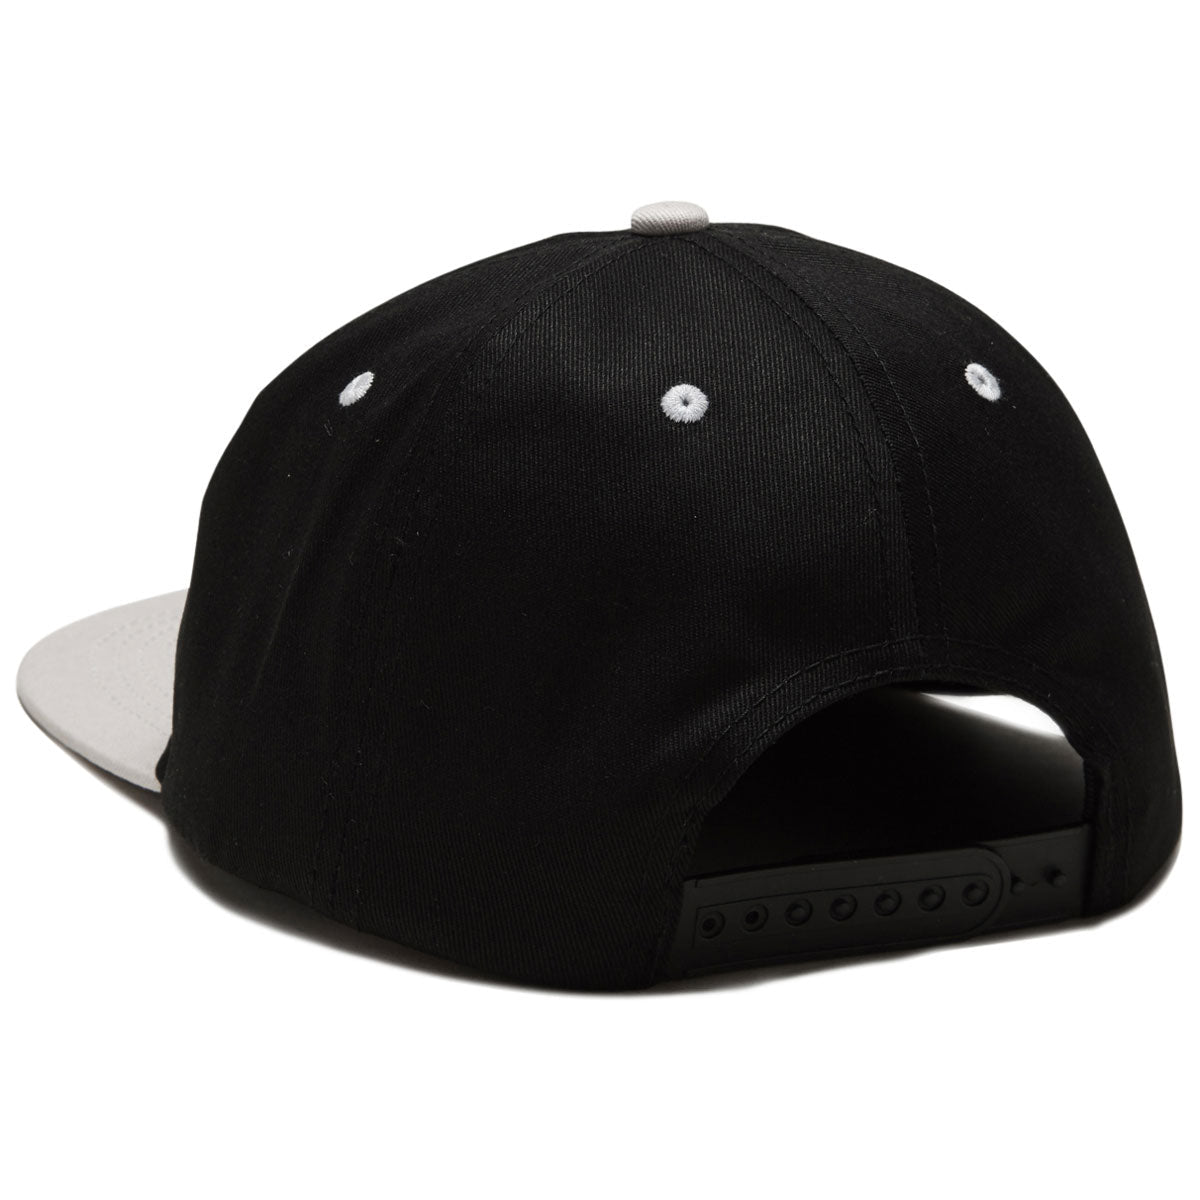 Baker Chain Hat - Black/Tan image 2